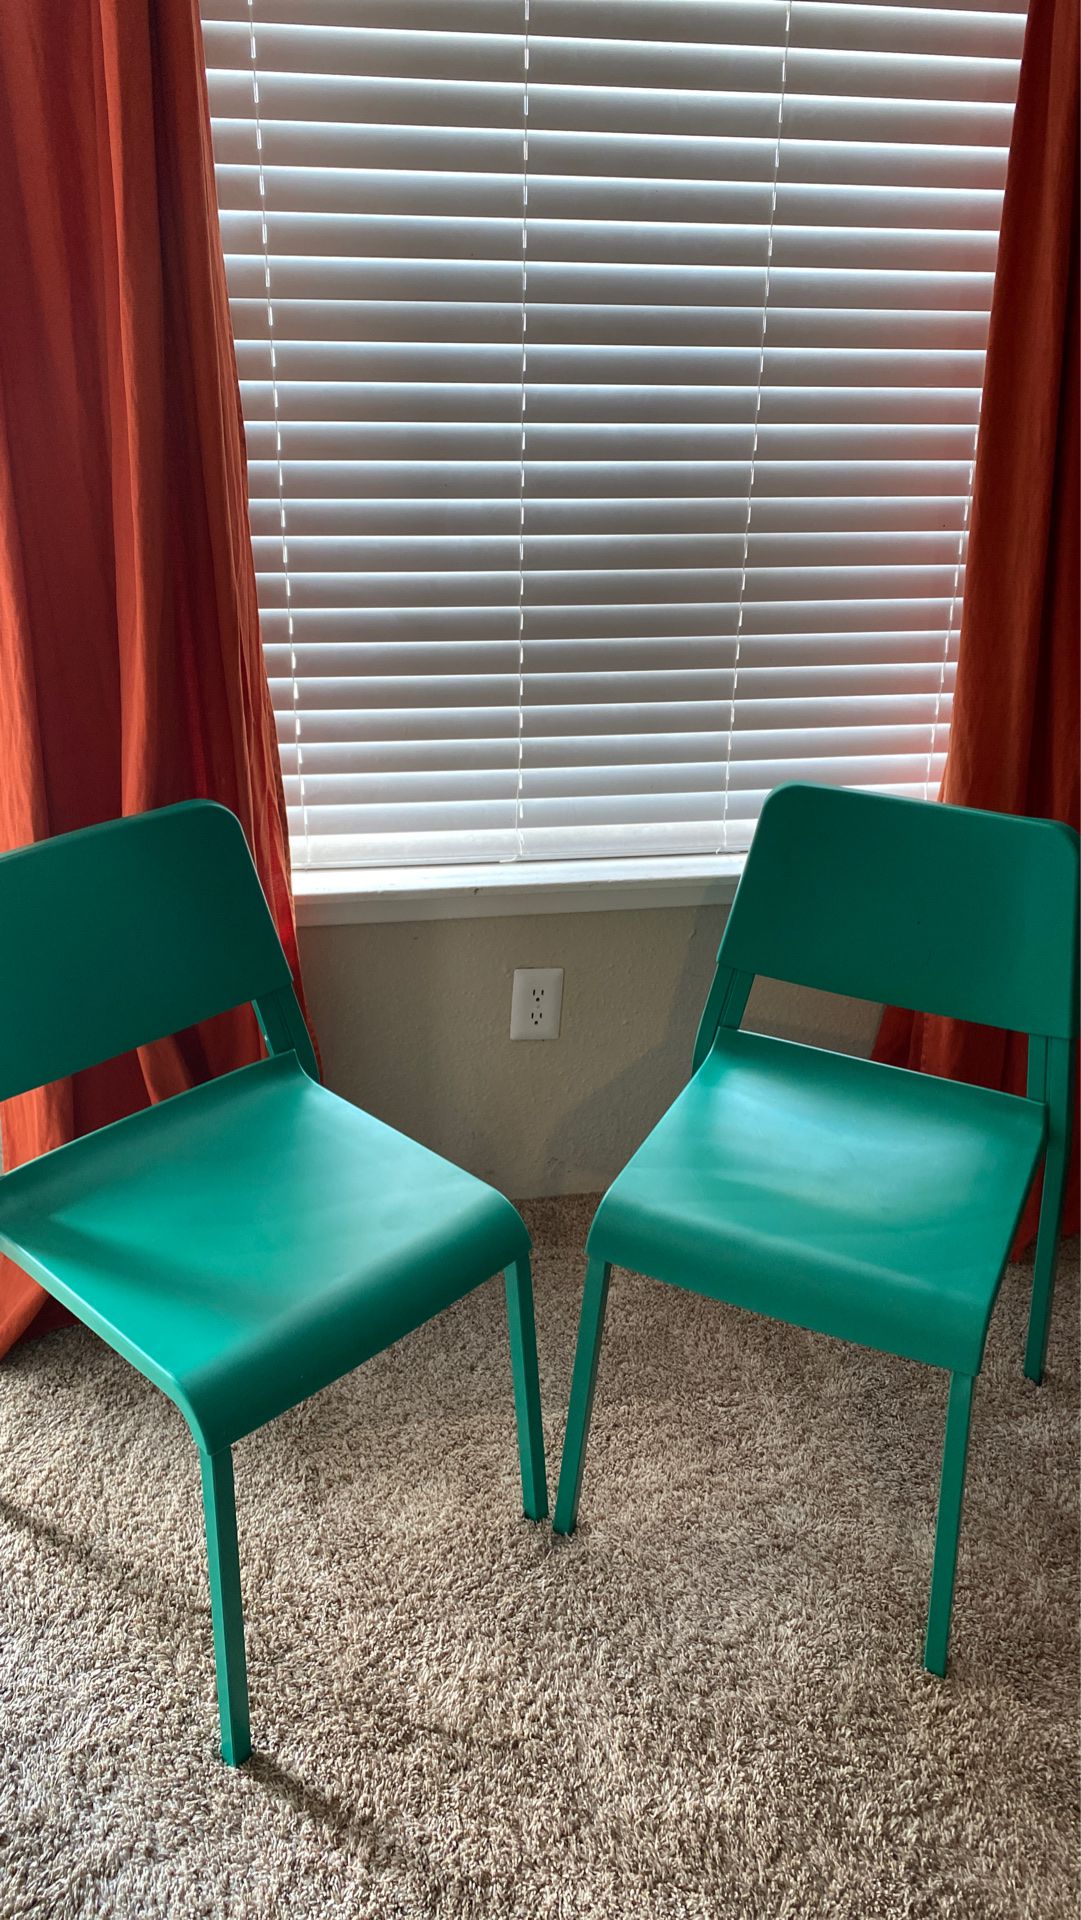 Green ikea chairs